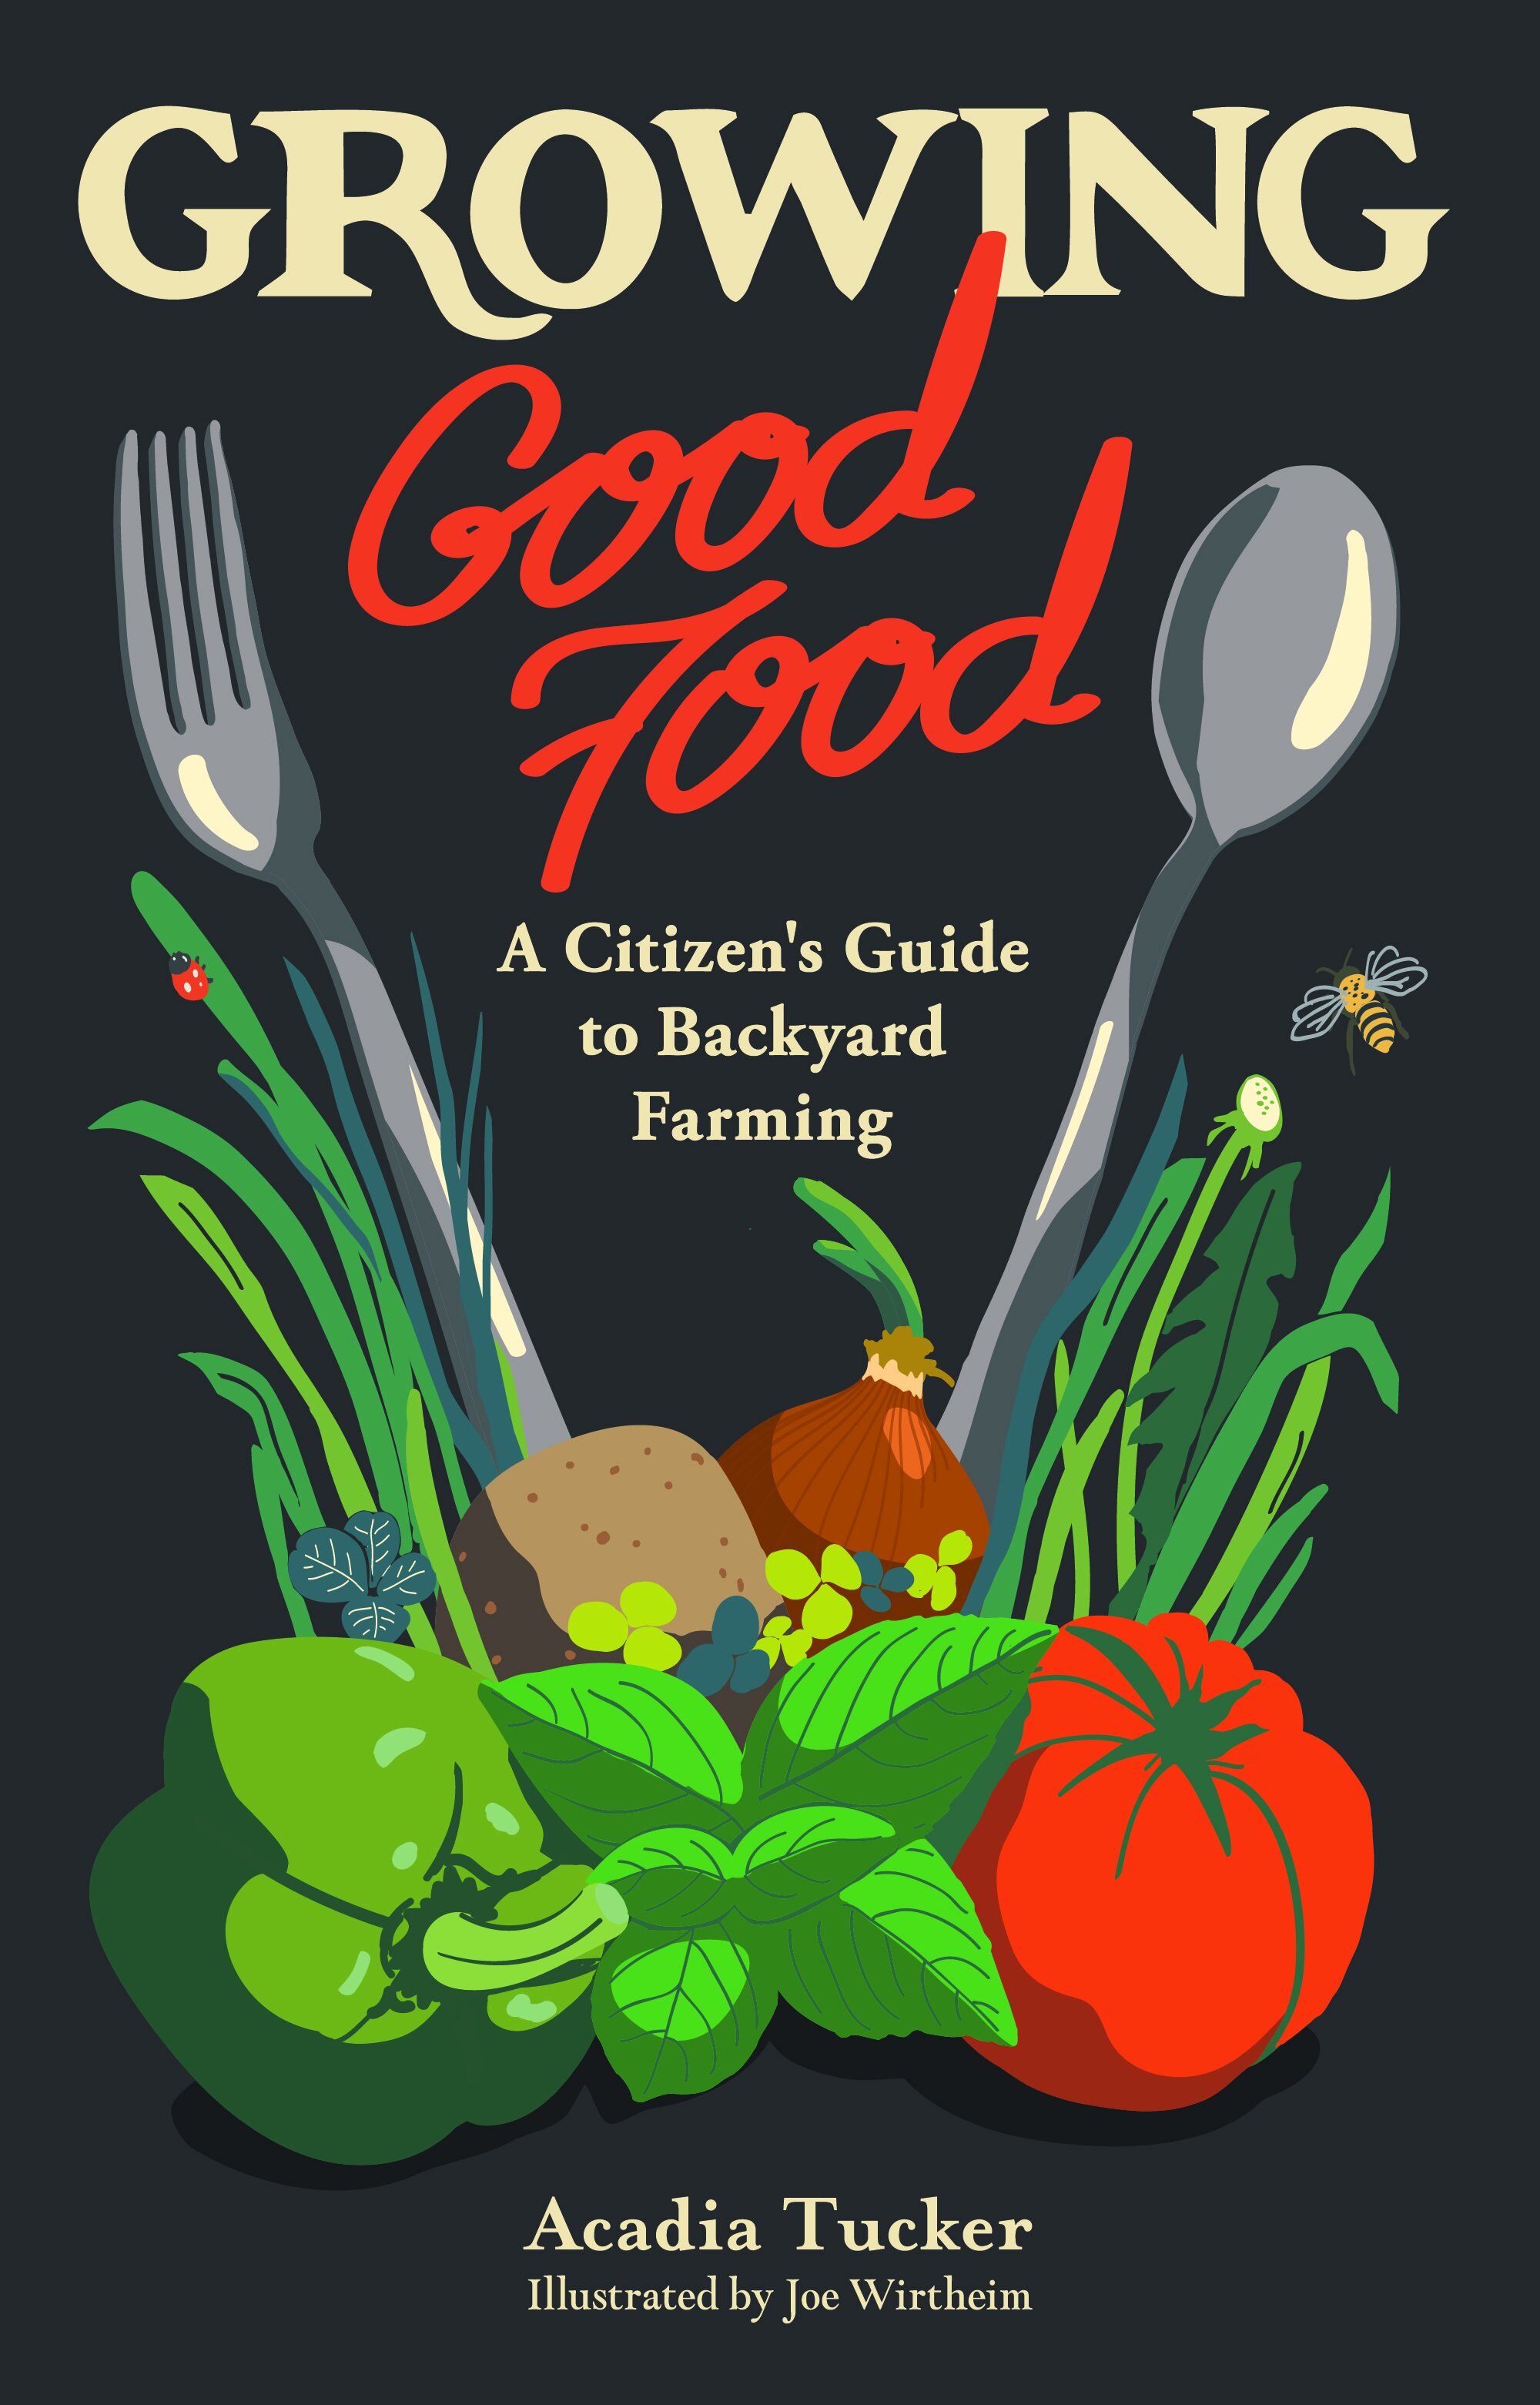 2019-Wirtheim-Growing_Good_Food-Cover-Final-1.jpg